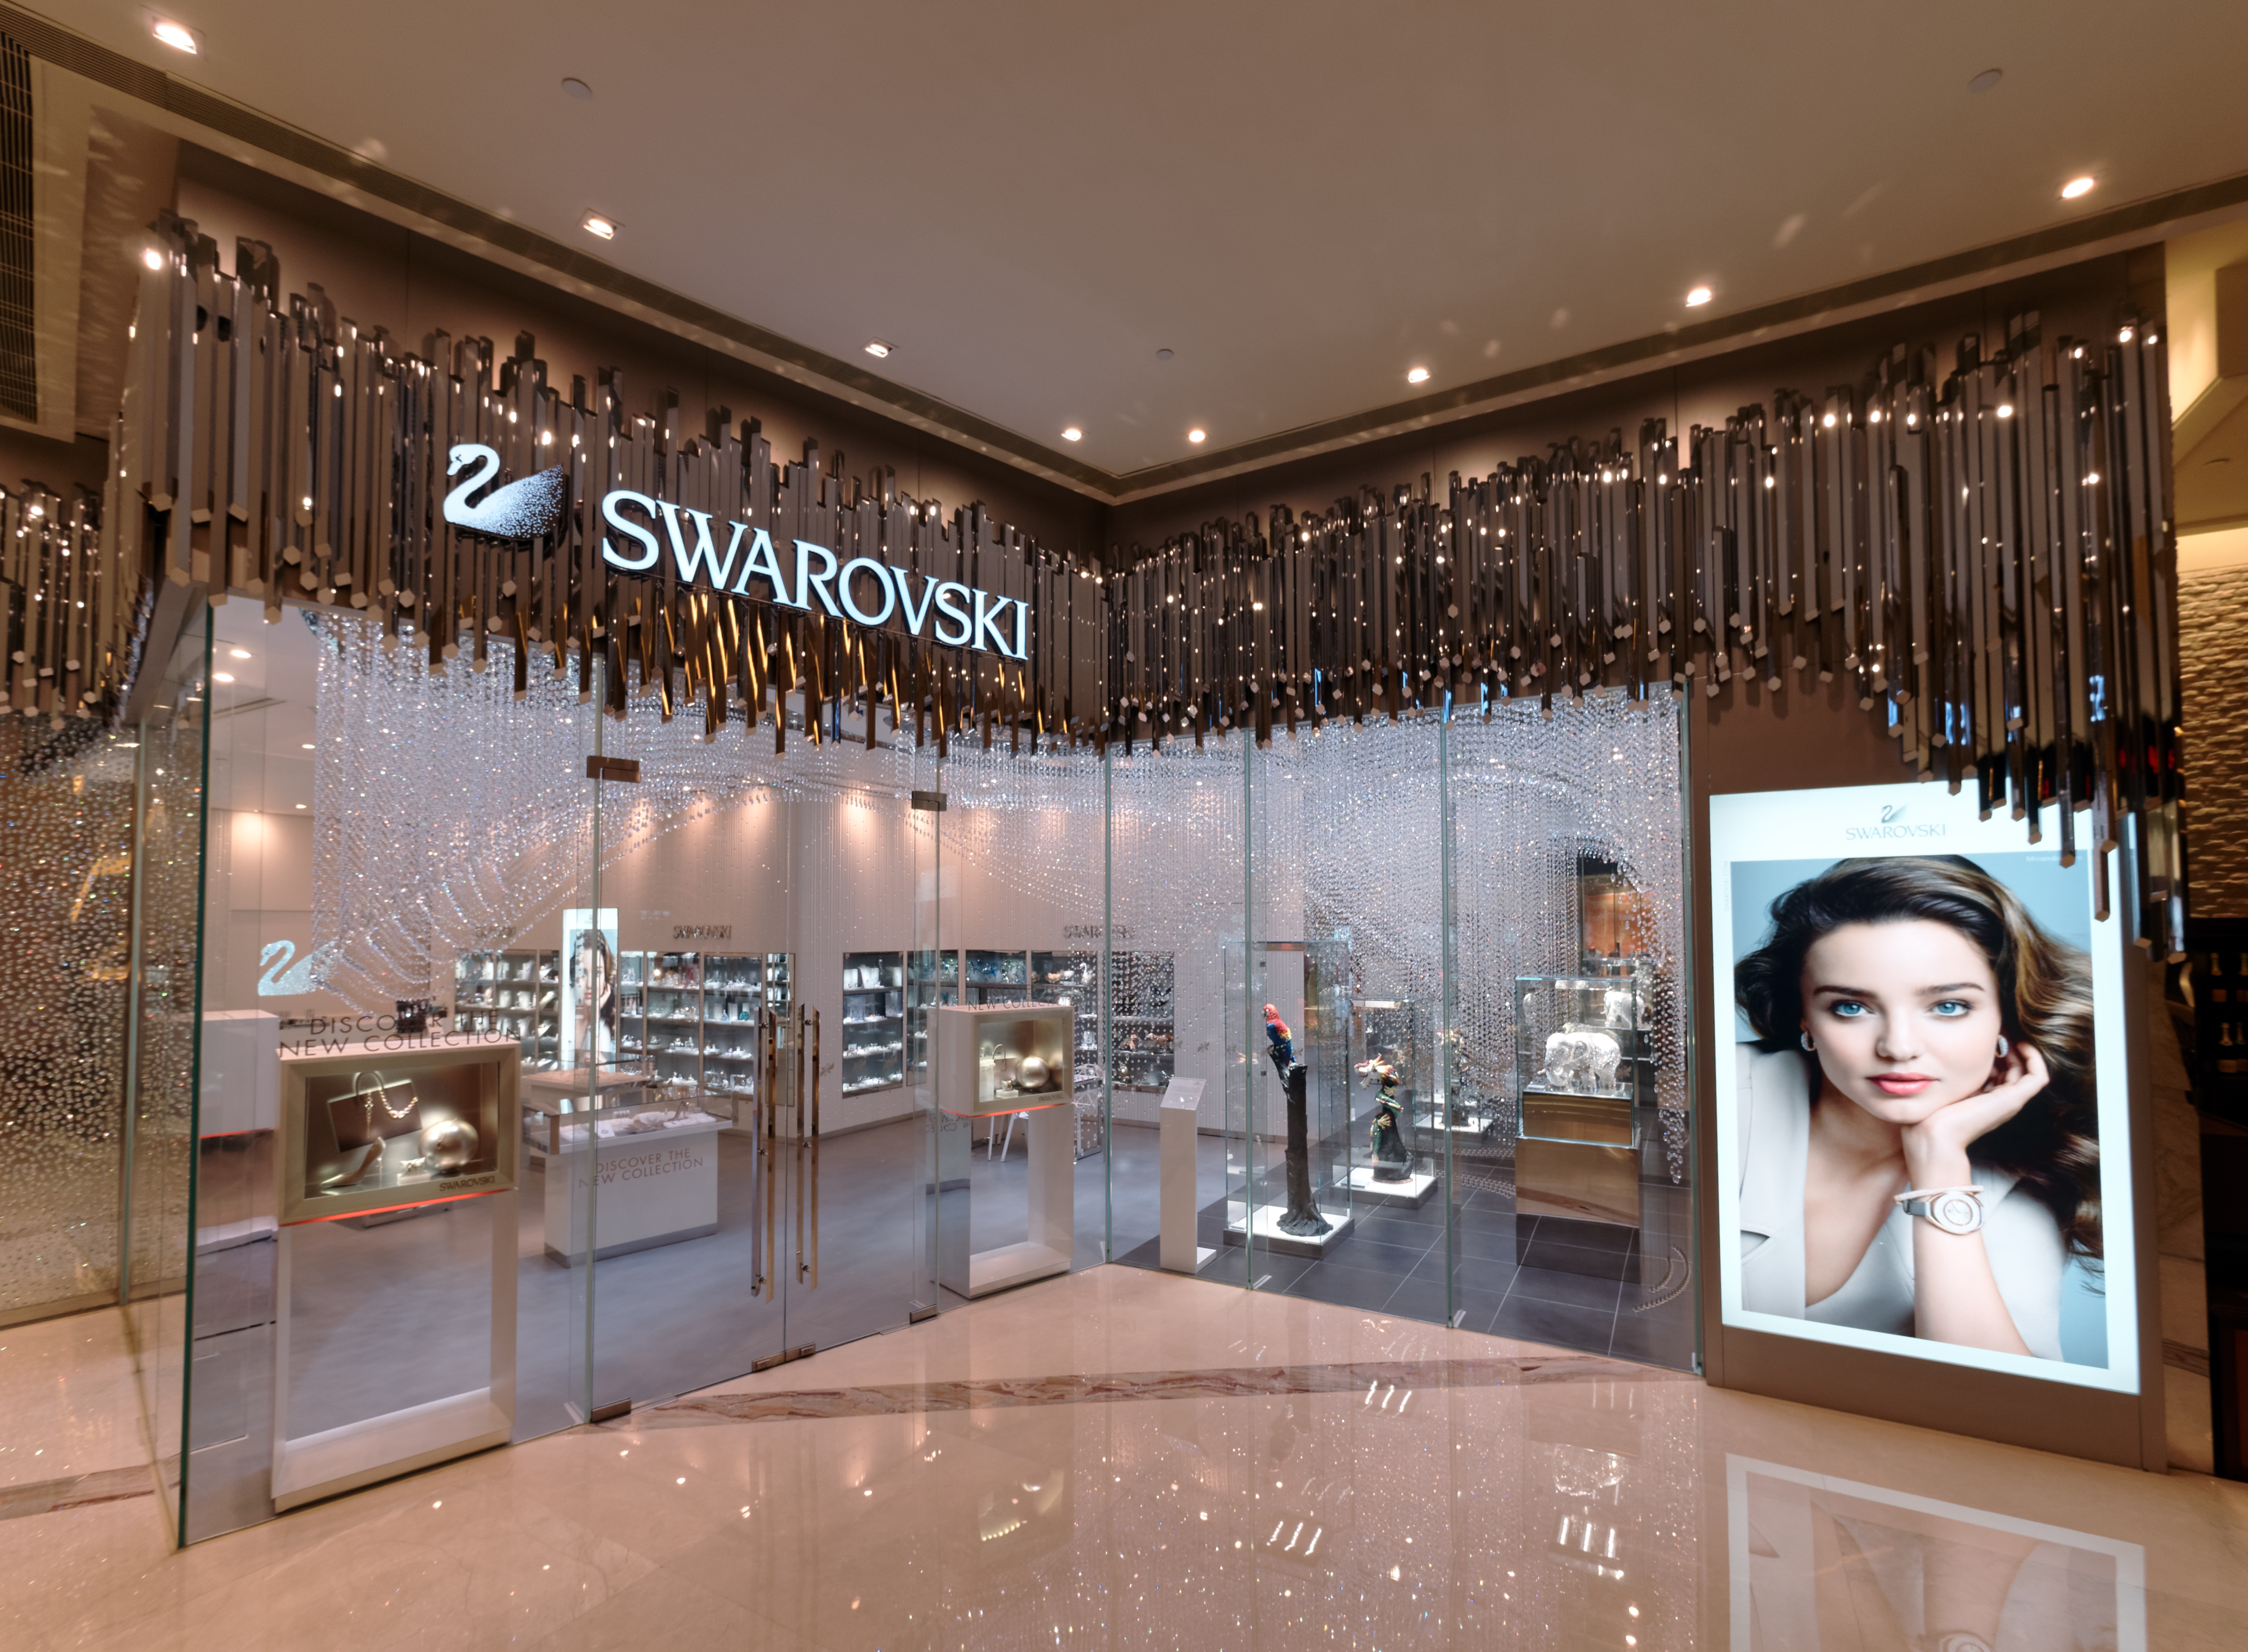 Swarovski.com US Cyber Monday Beauty Deals & Sales | Chic moeY - Will Swarovski Have Black Friday Deals